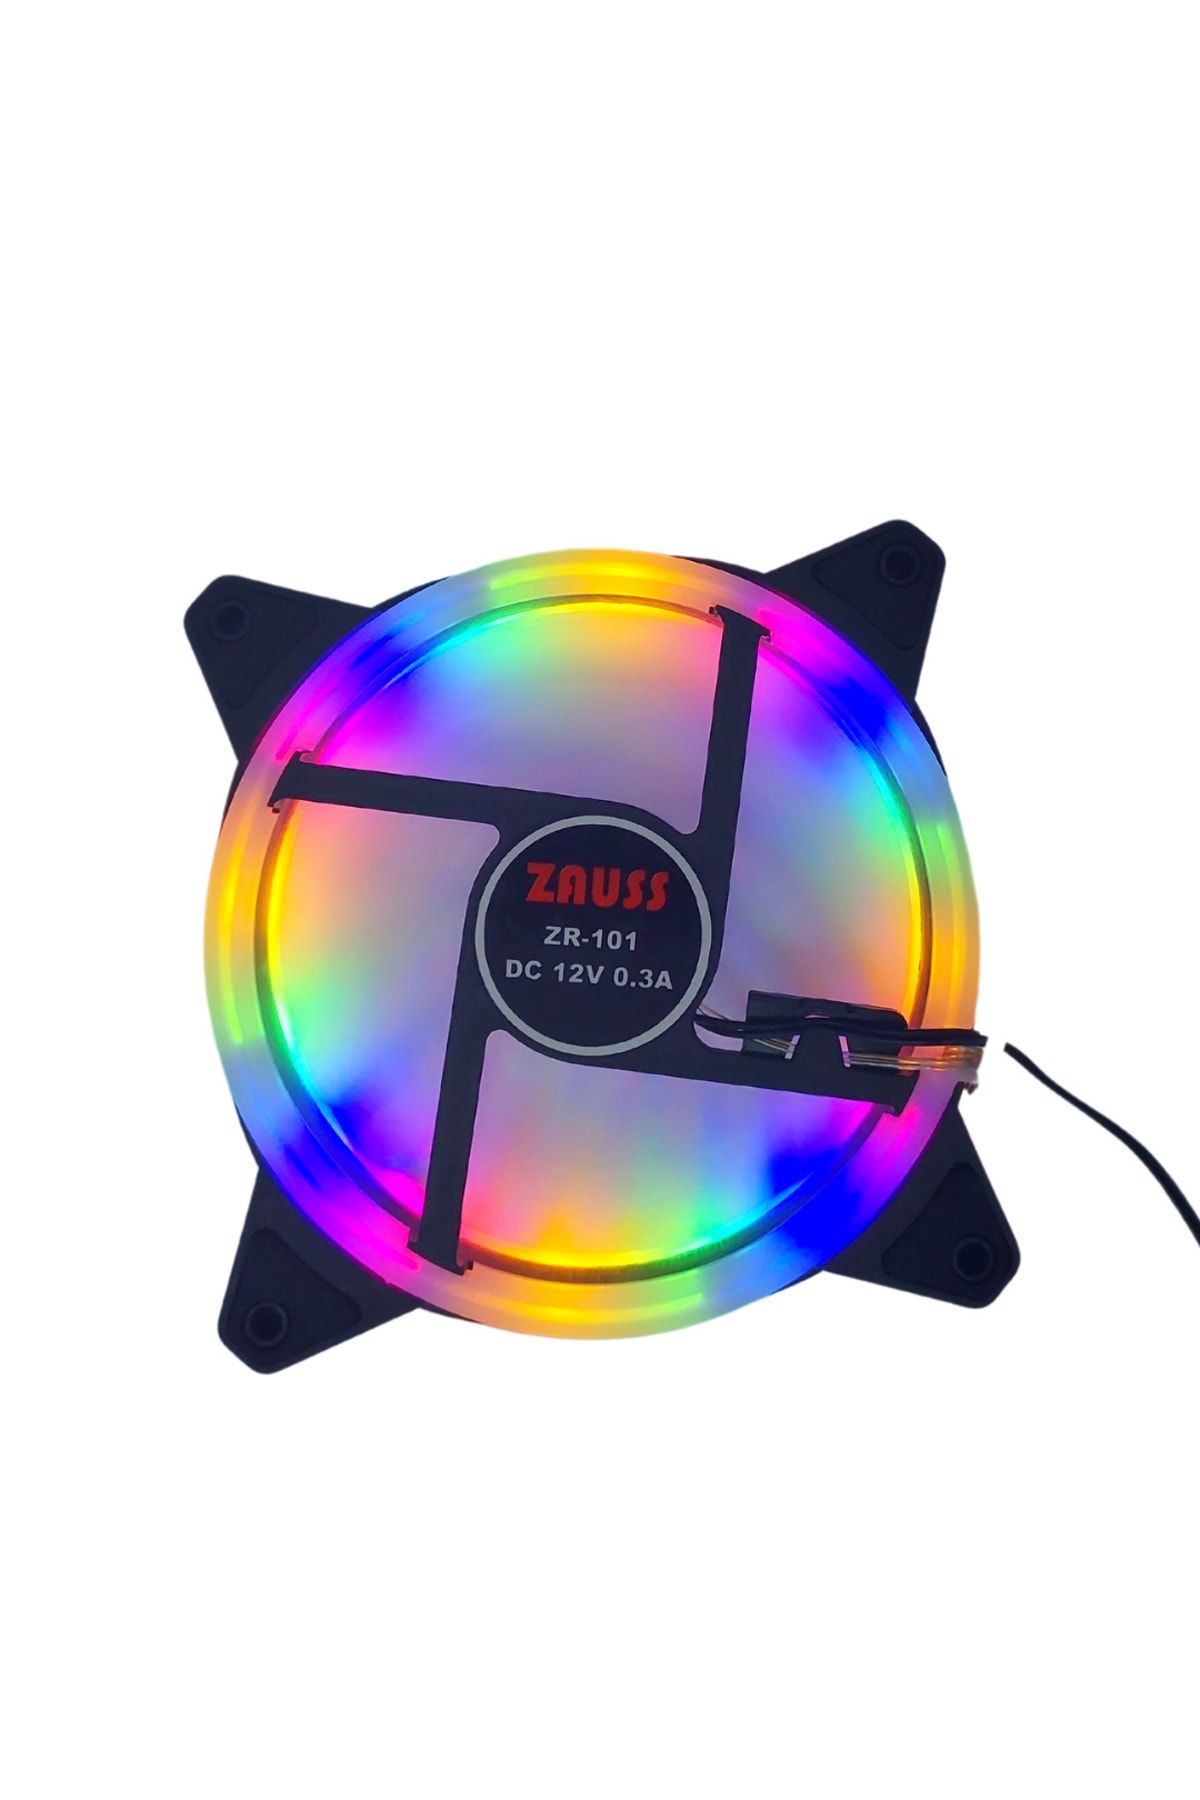 ZAUSS Molex Girişli Sessiz Renkli Fan 12cm Rainbow Kasa Fanı Rgb 120mm Fan